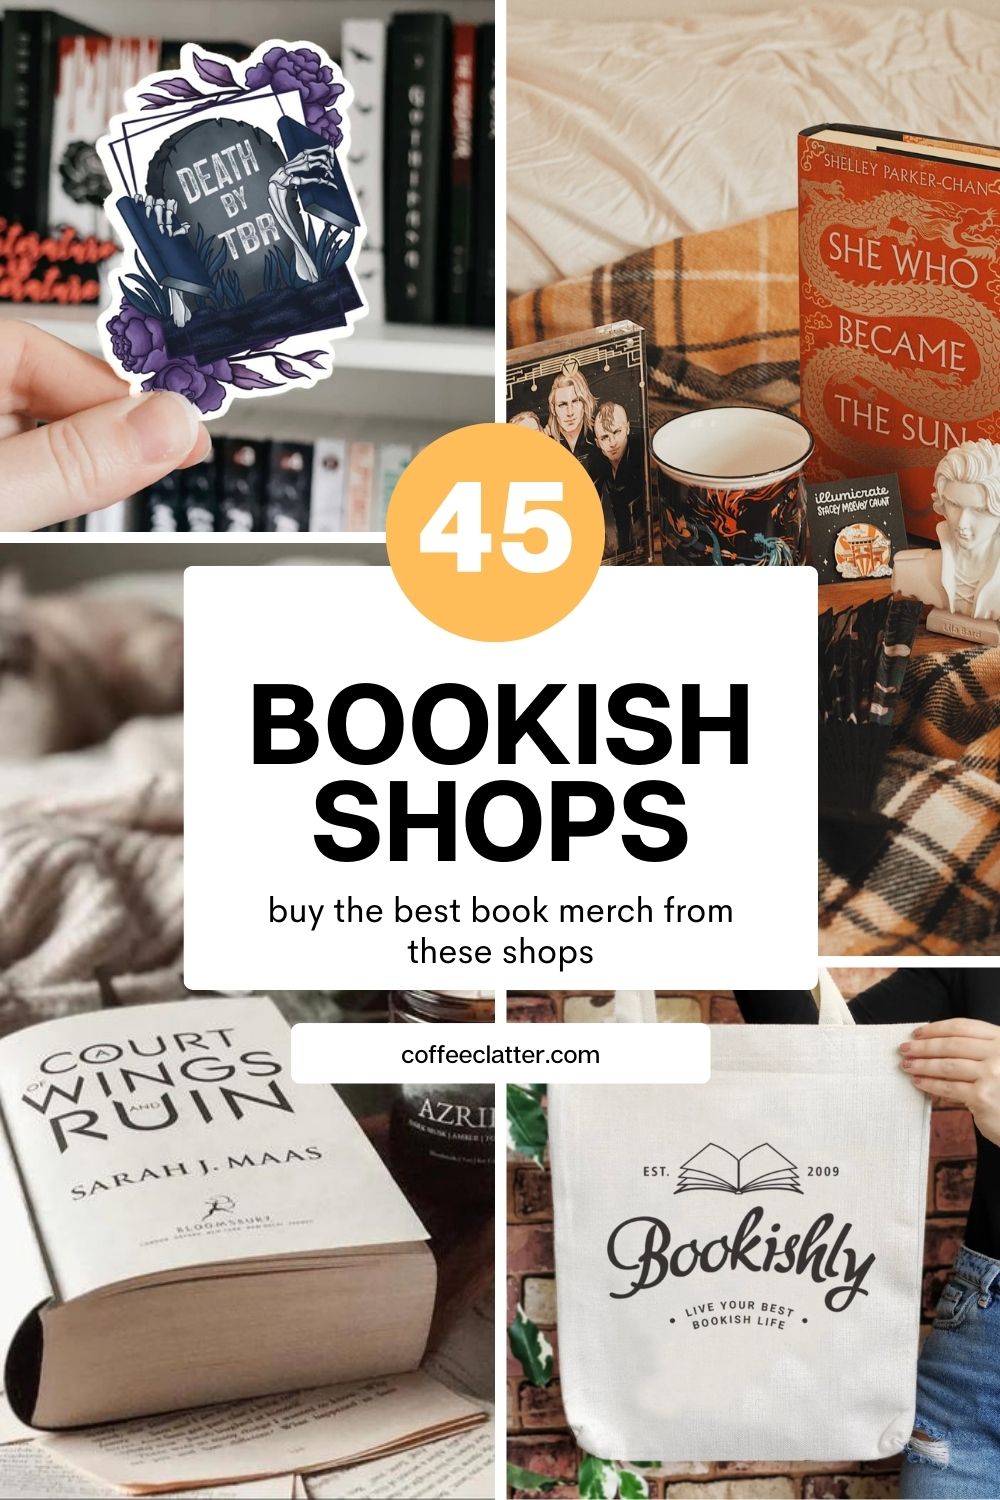 Bookish-shops-stores-merch-candles-enamel-pins-sweatshirts-online-shopping